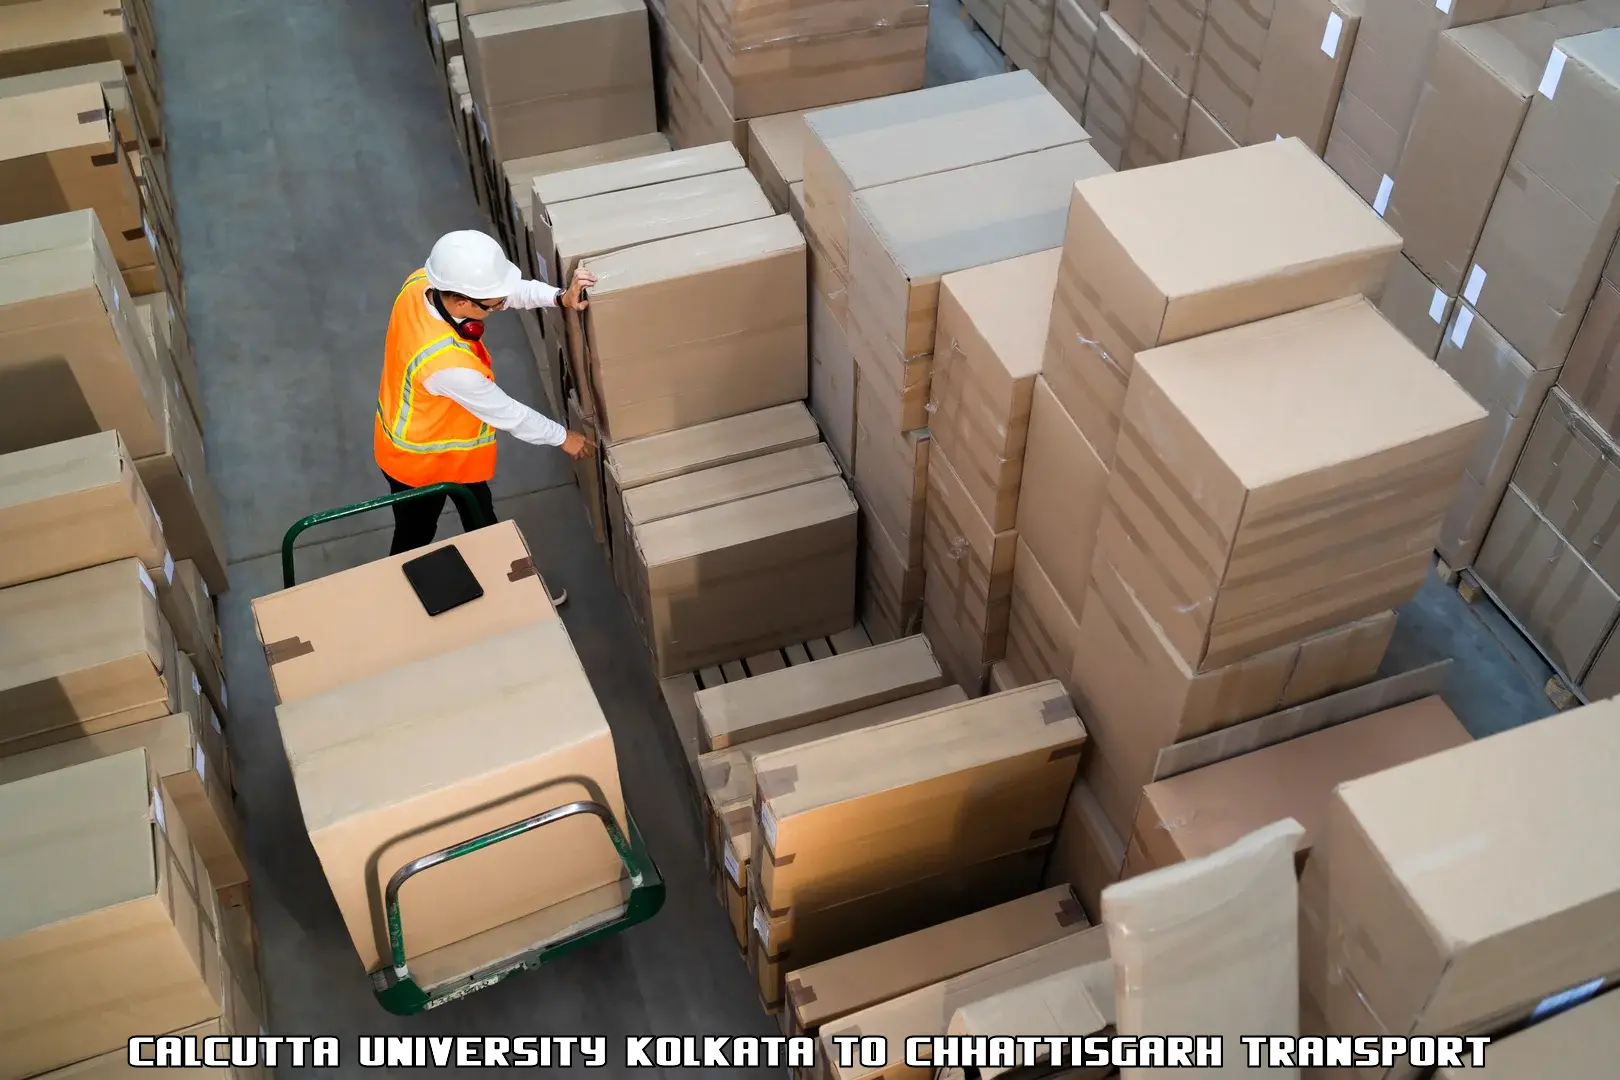 Package delivery services Calcutta University Kolkata to Kawardha